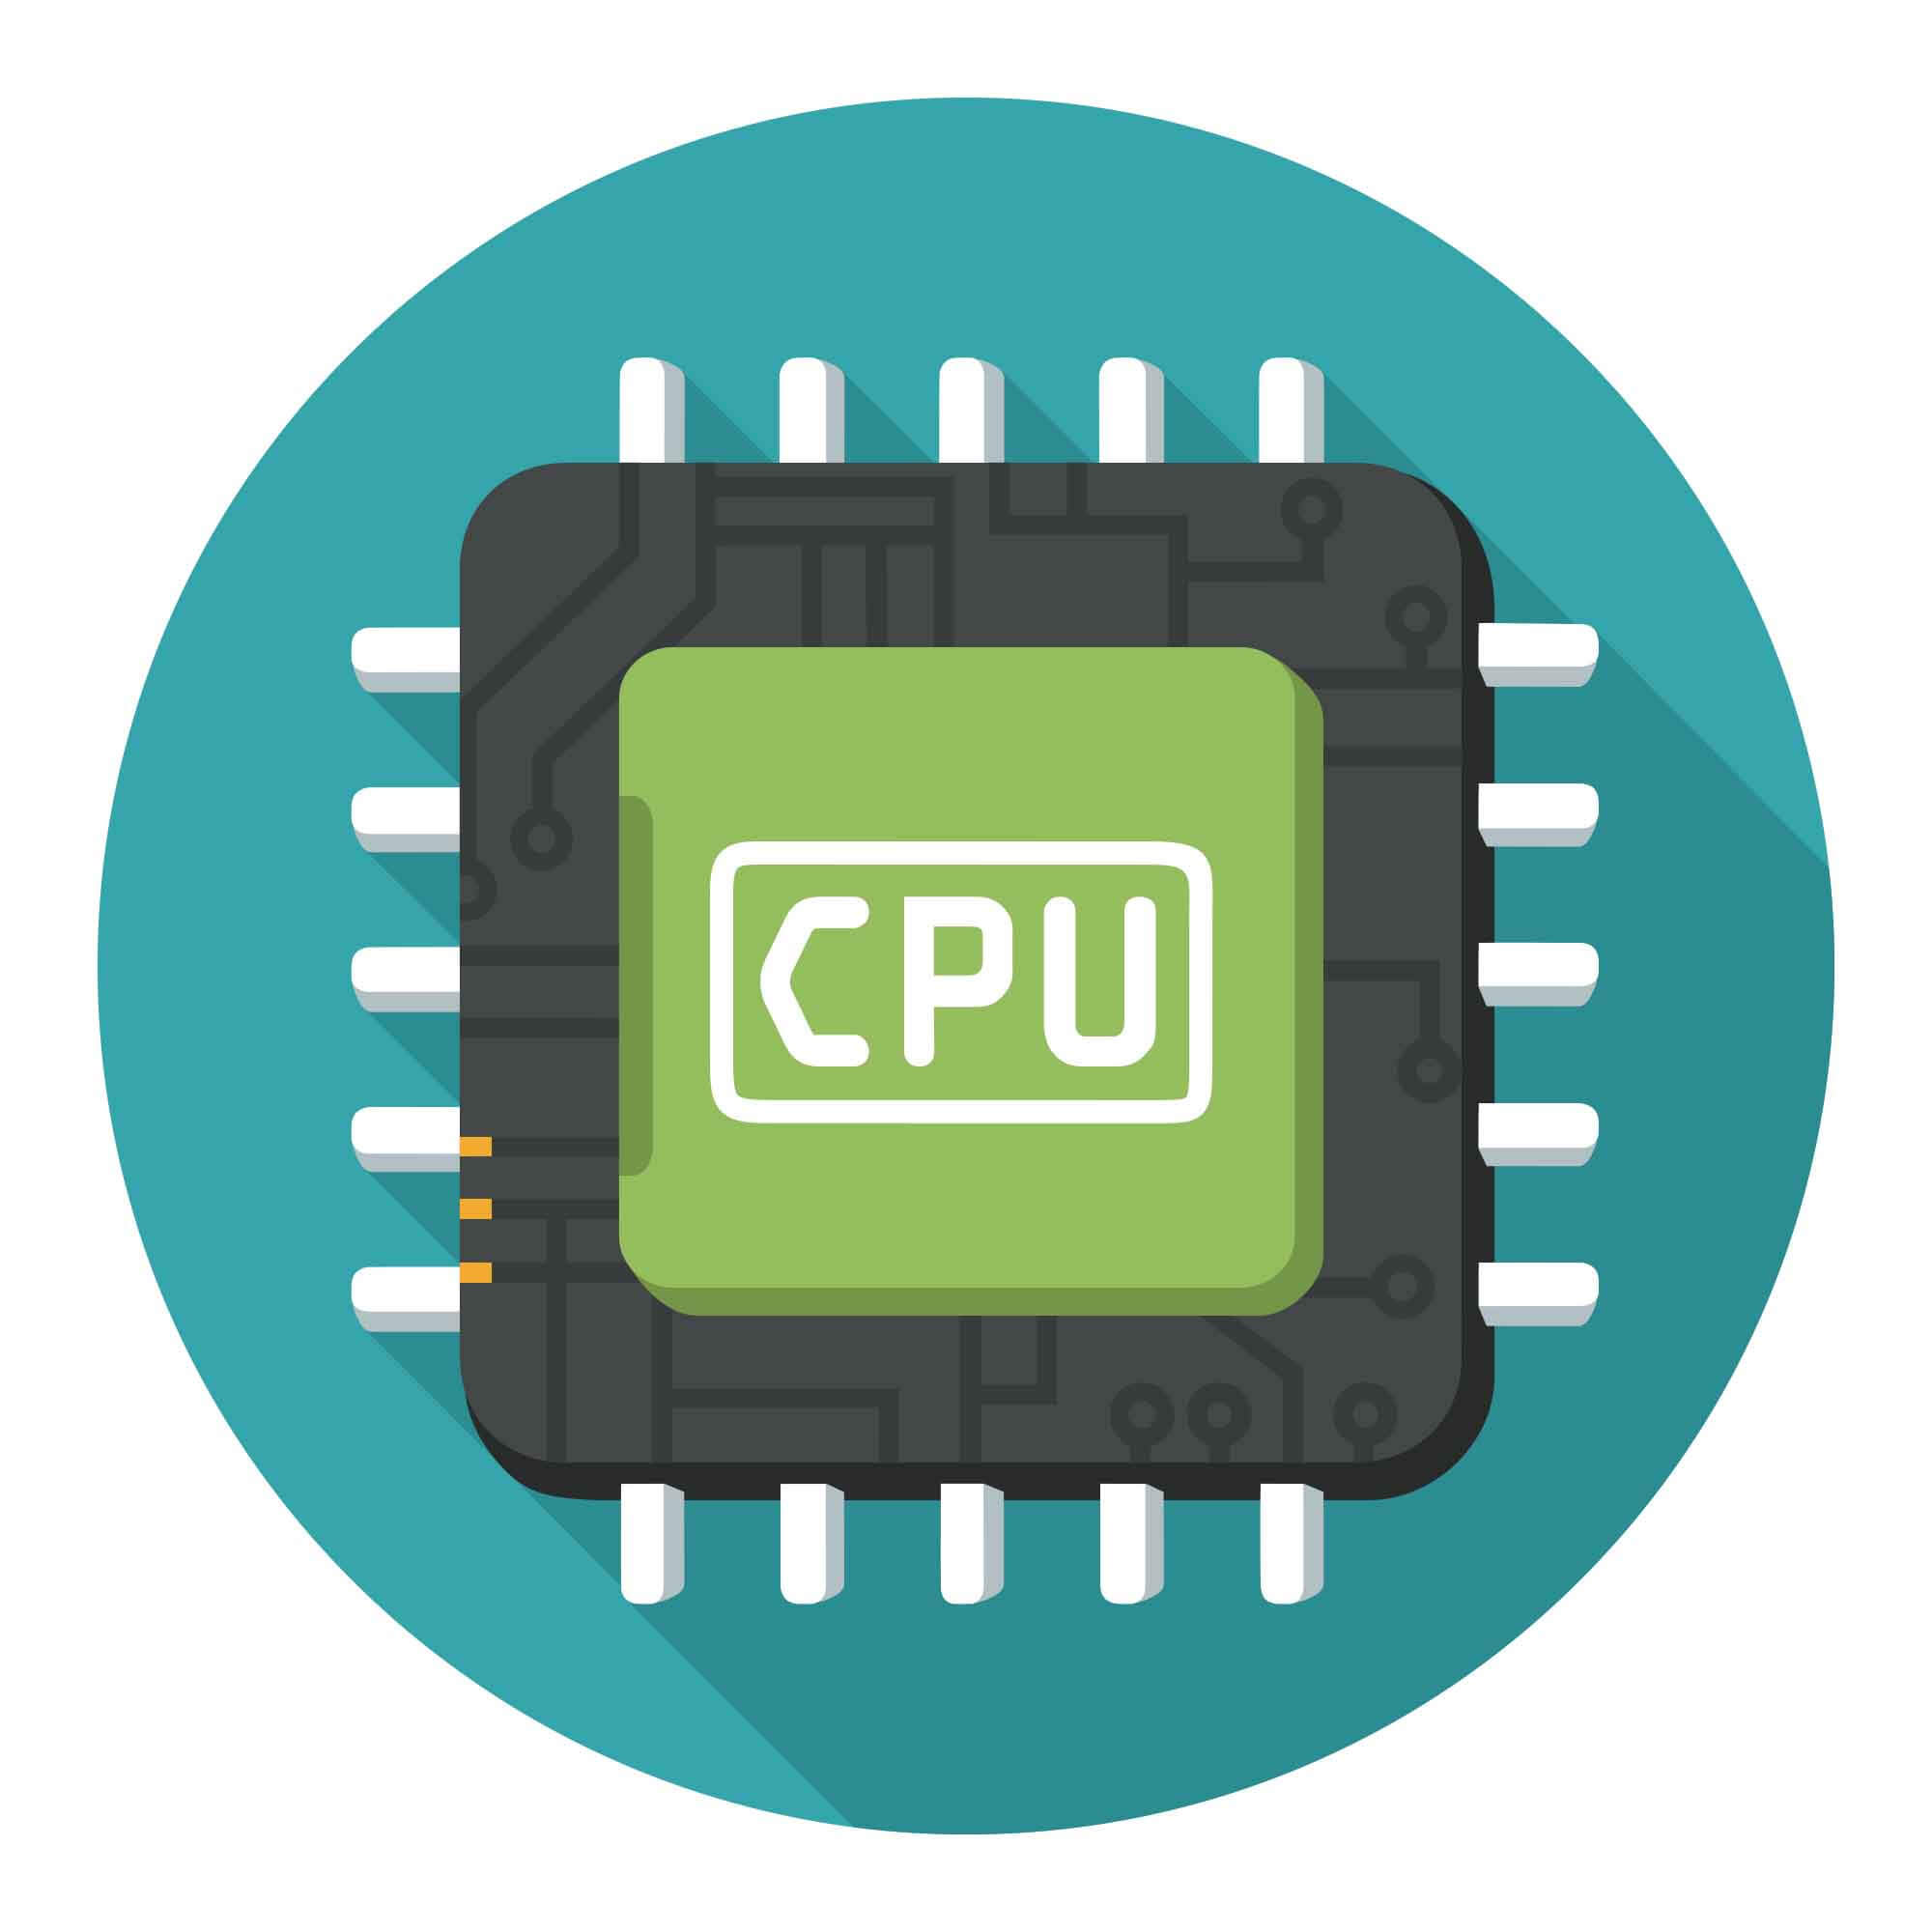 Cos'è l'undervolting di una CPU? Spiegato in dettaglio